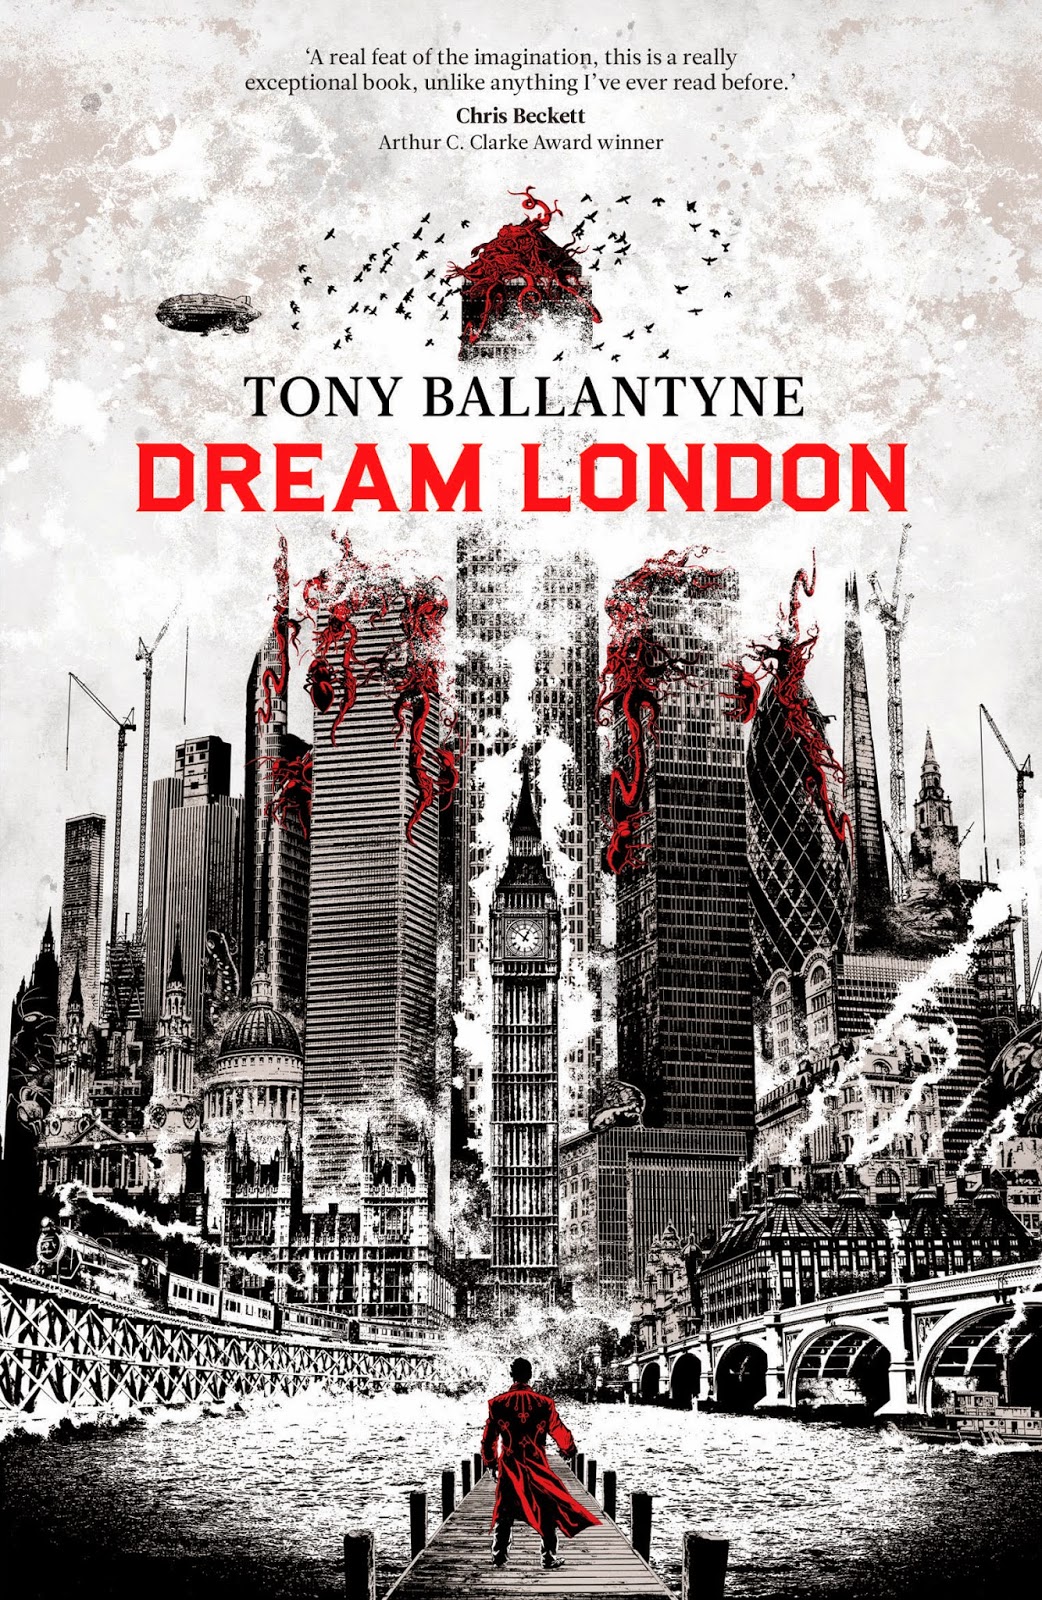 http://www.amazon.co.uk/Dream-London-Tony-Ballantyne/dp/1781081735/ref=sr_1_1?s=books&ie=UTF8&qid=1398158215&sr=1-1&keywords=Dream+London